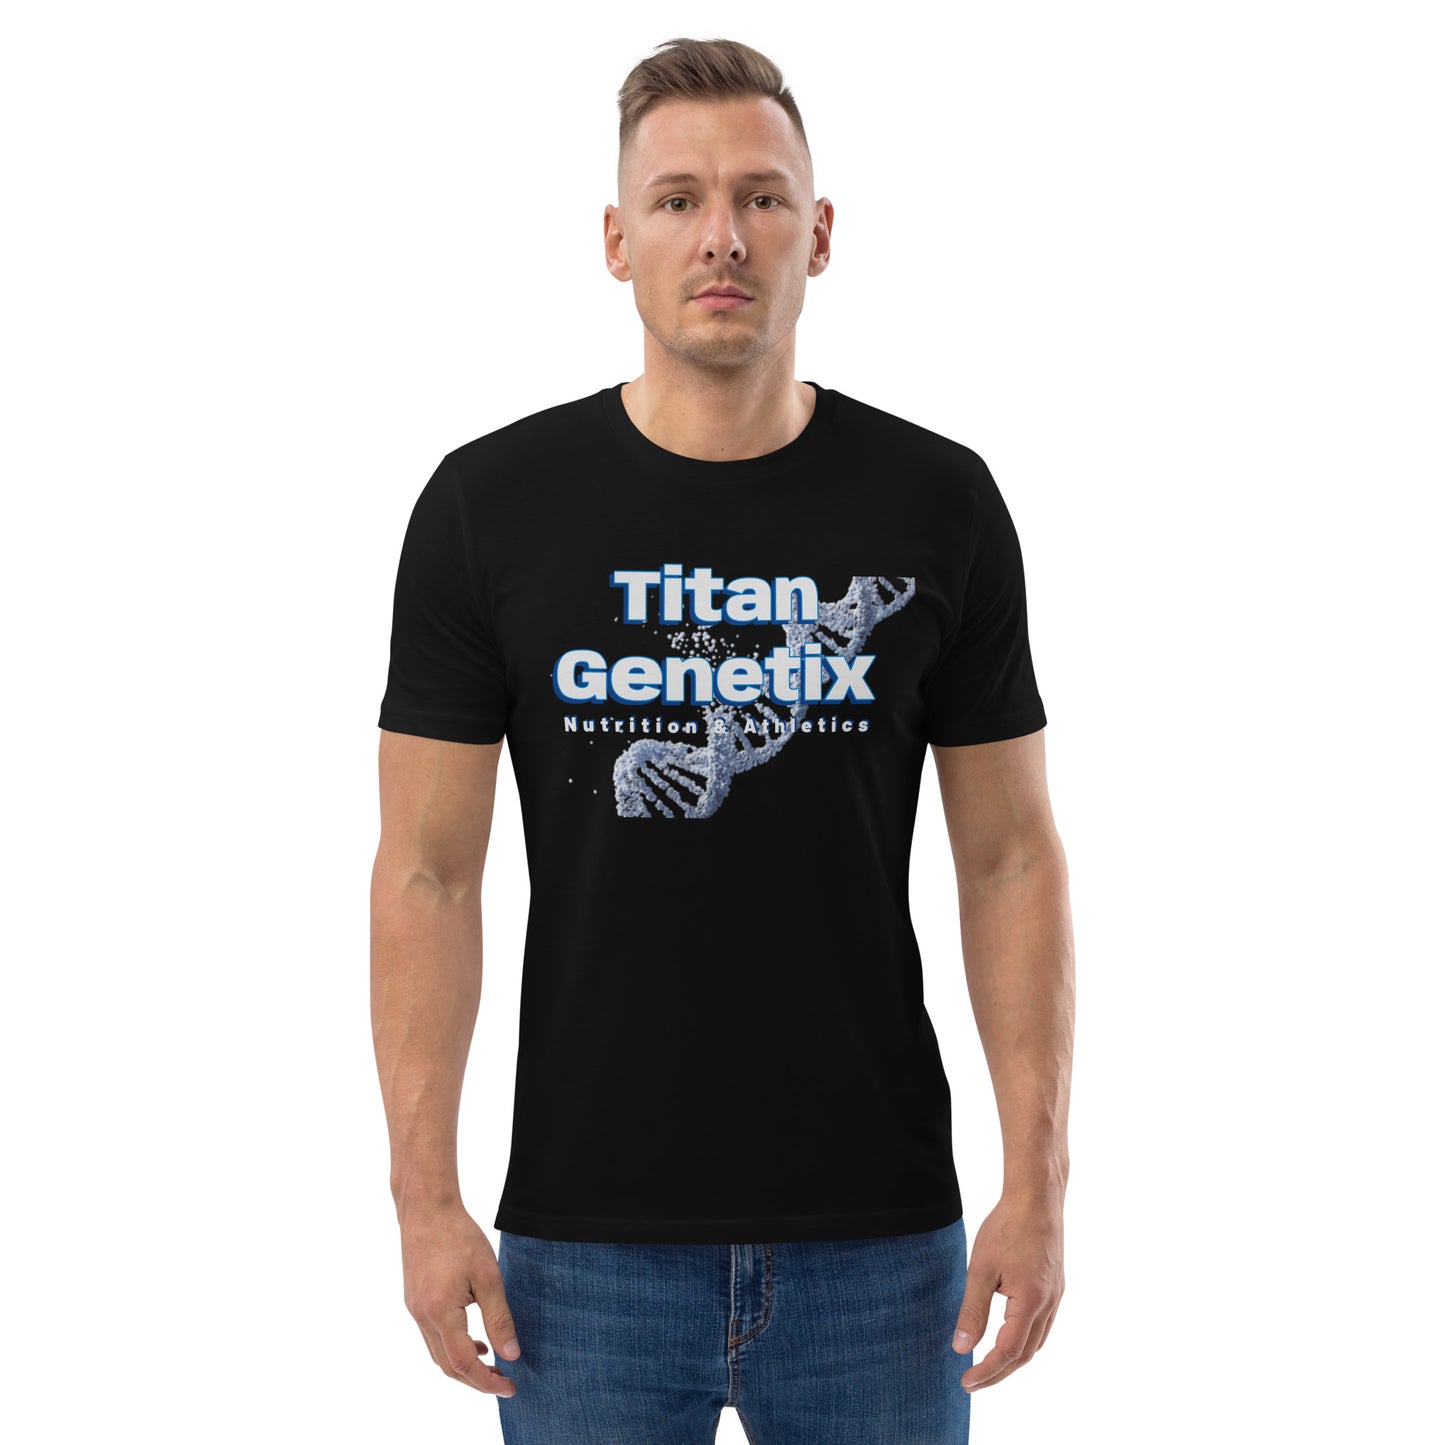 Titan Genetix DNA - Unisex Organic Cotton Tee